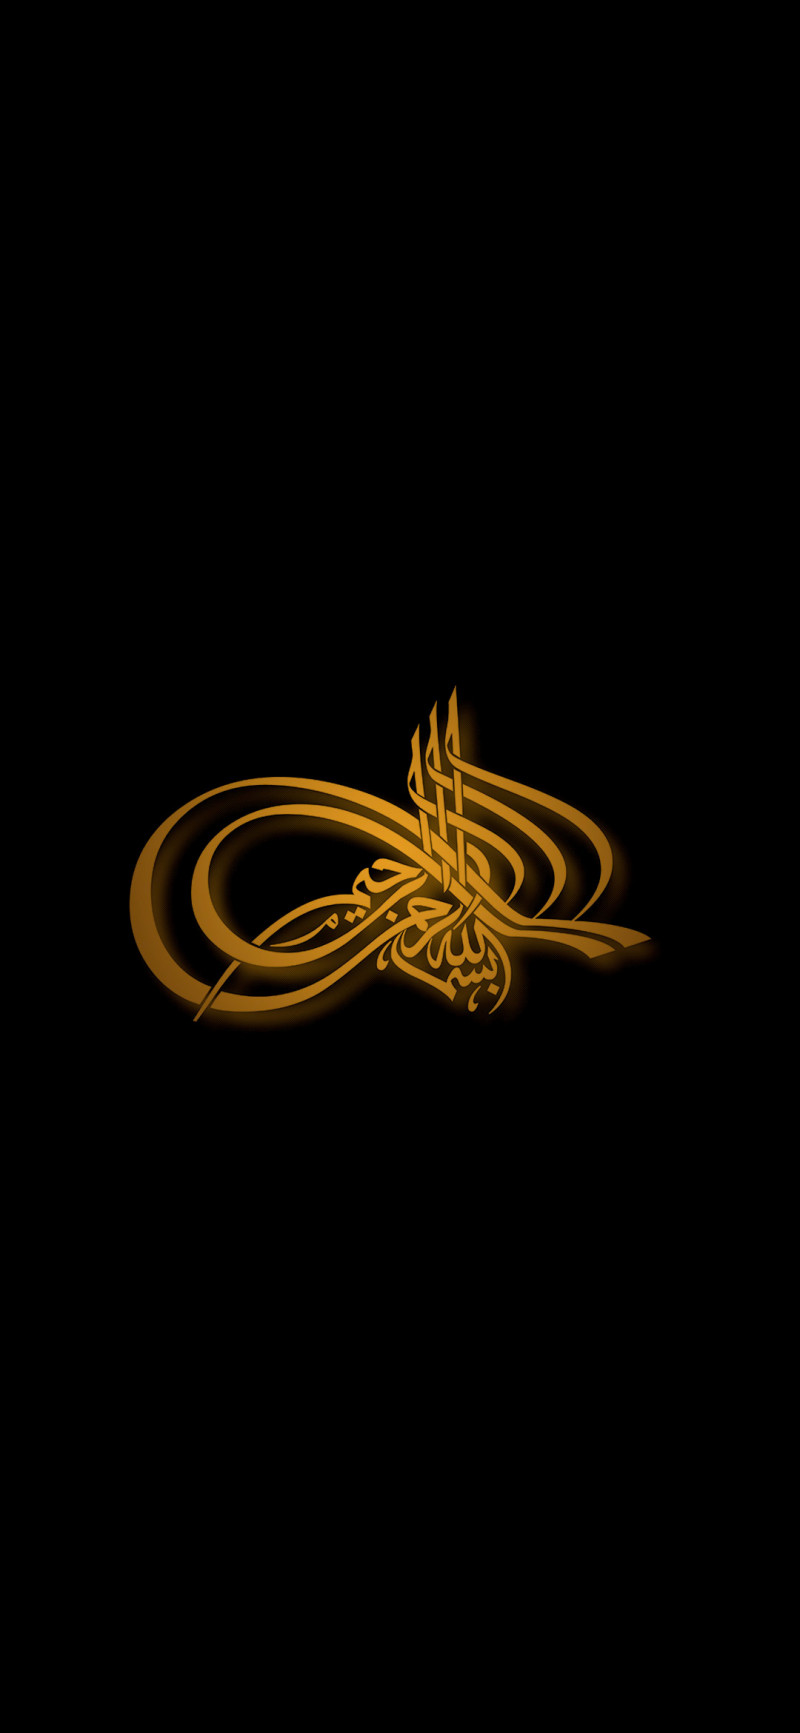 Free photo of Calligraphy Art Amoled Islamic Wallpaper #2